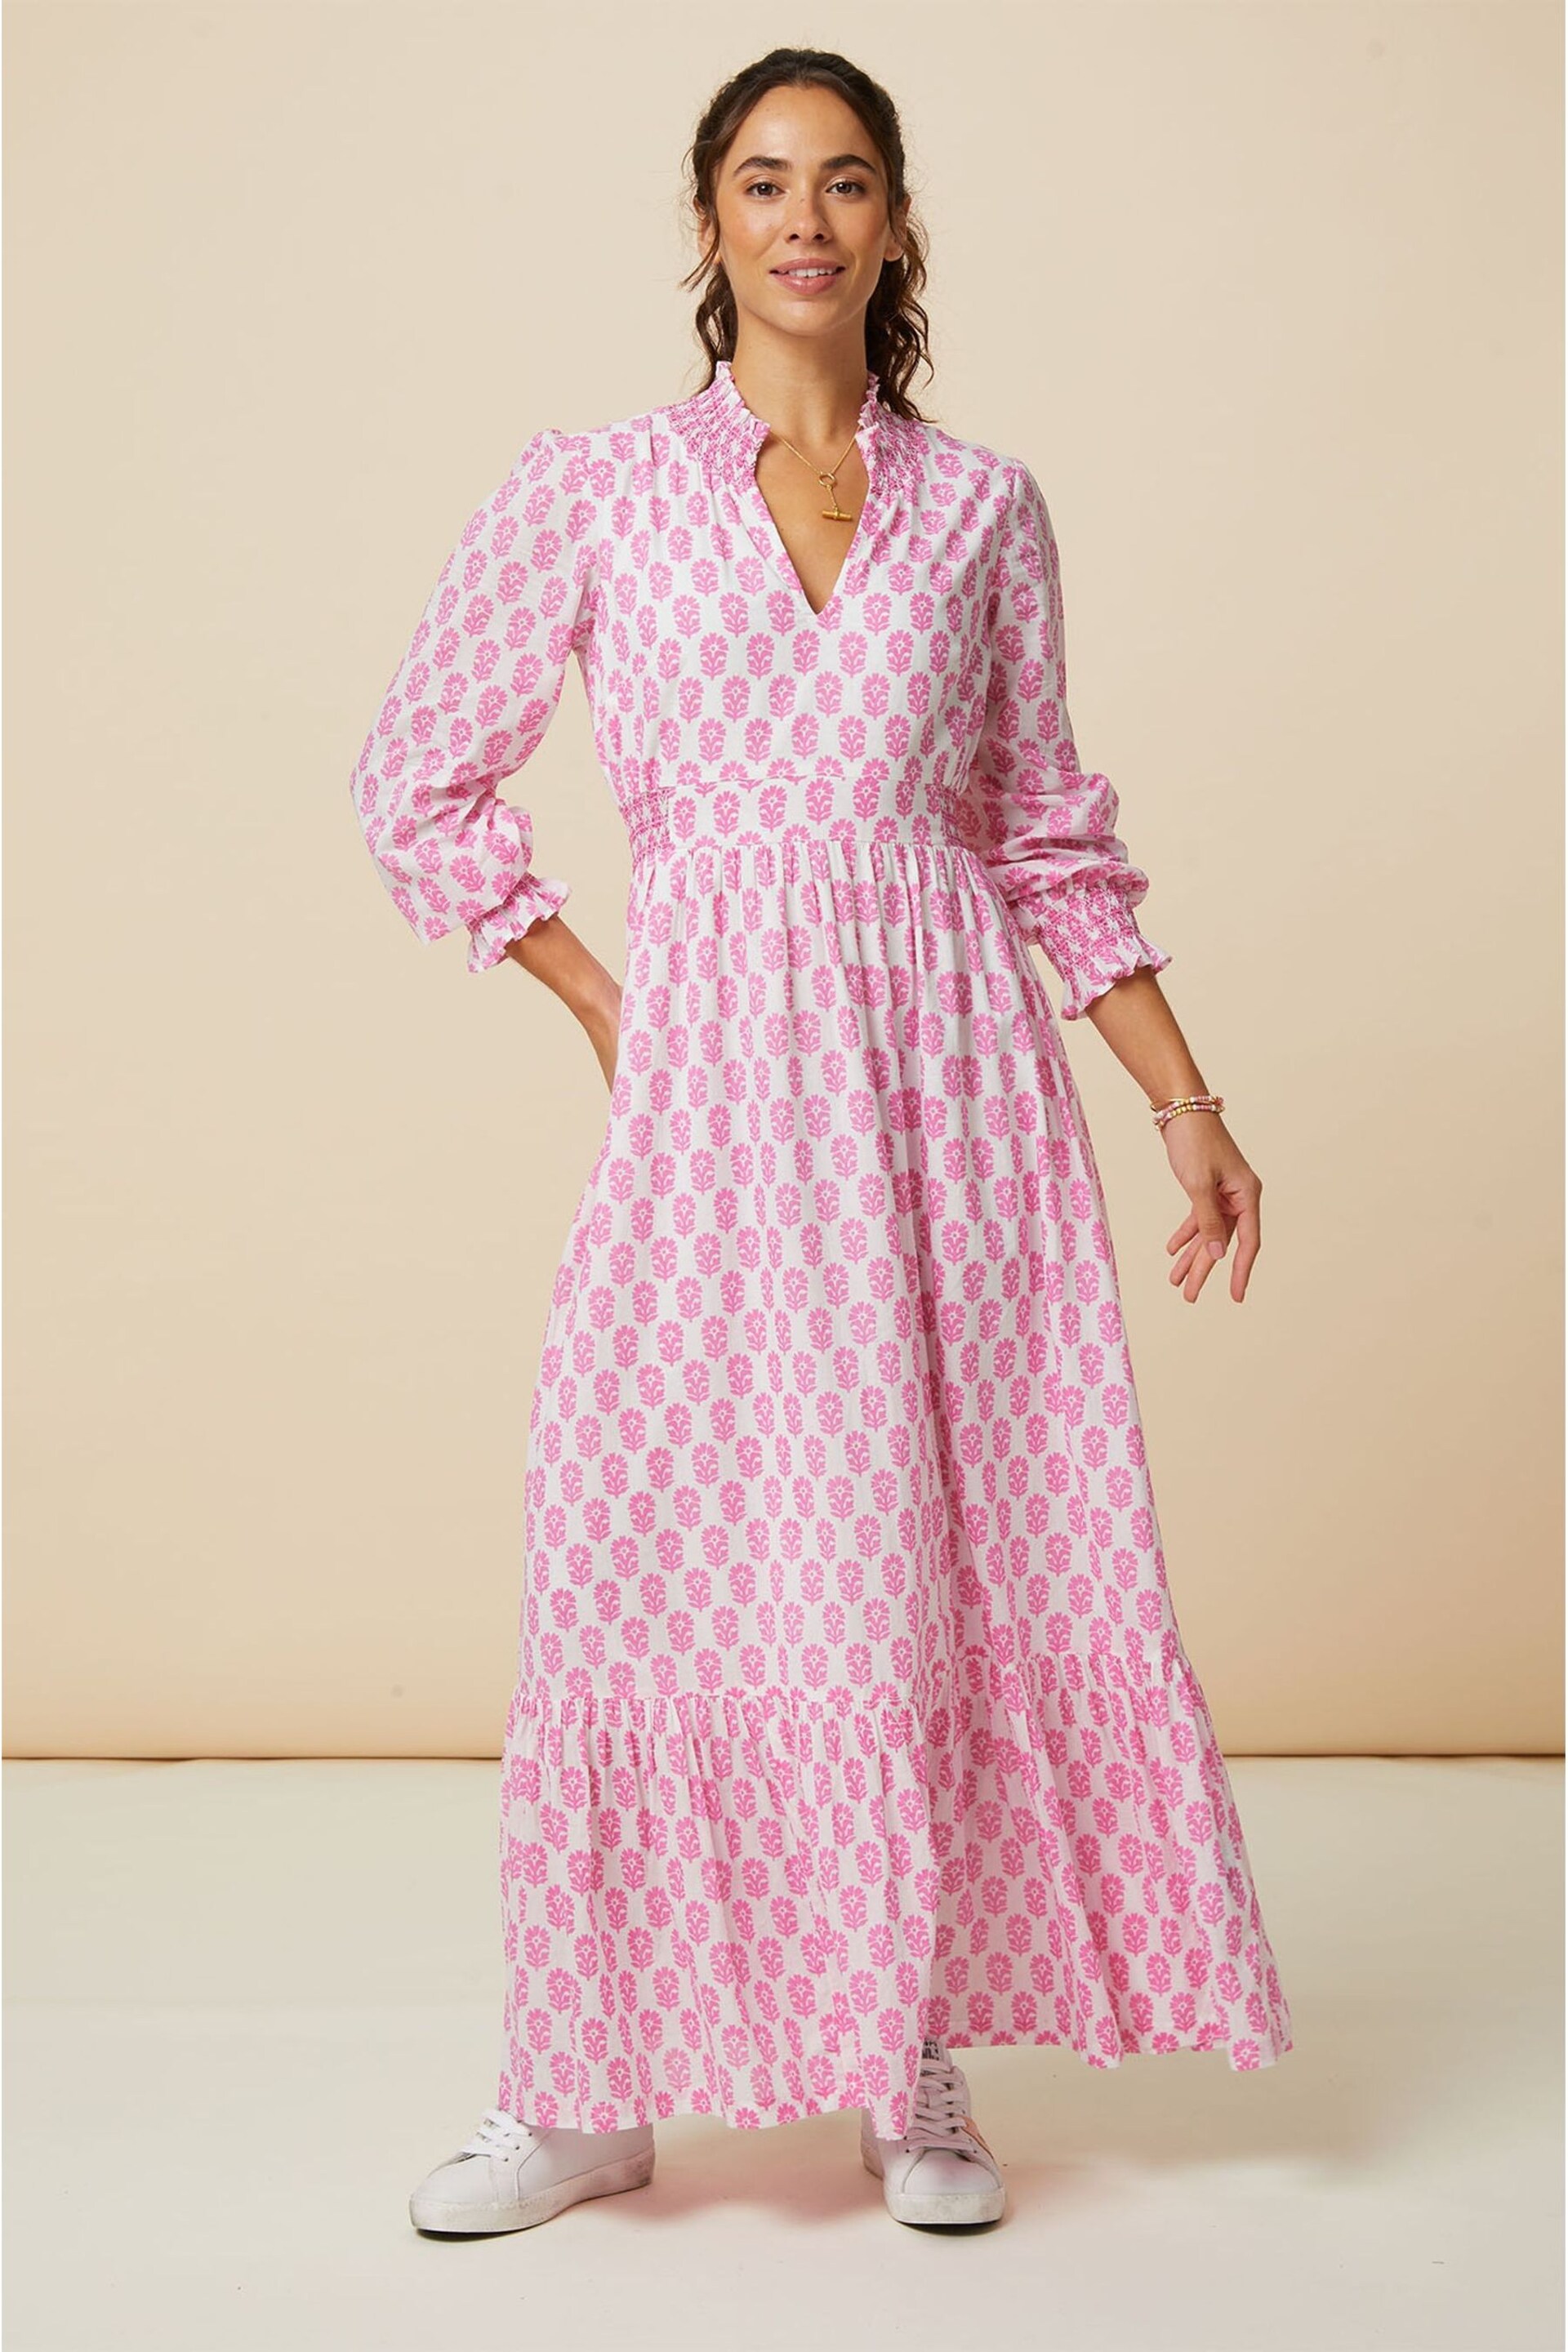 Aspiga Pink Emmeline Maxi Dress - Image 1 of 7